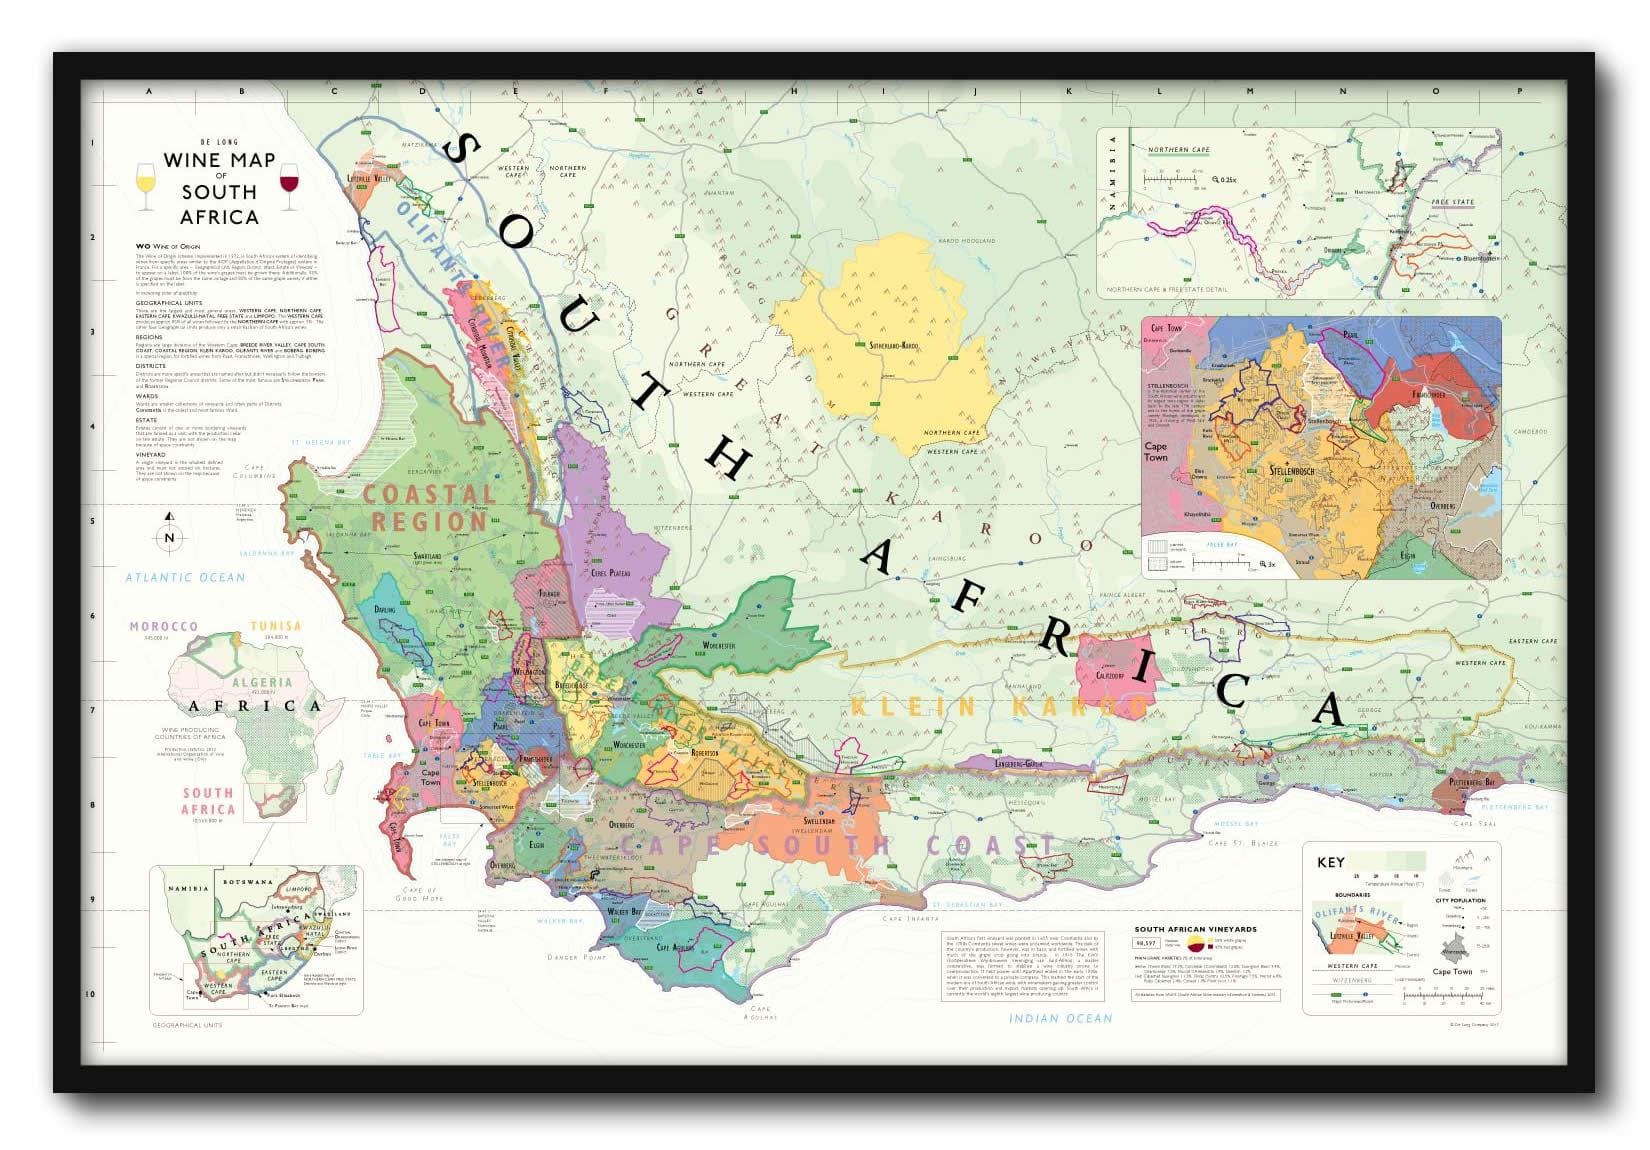 de long wine maps of the world